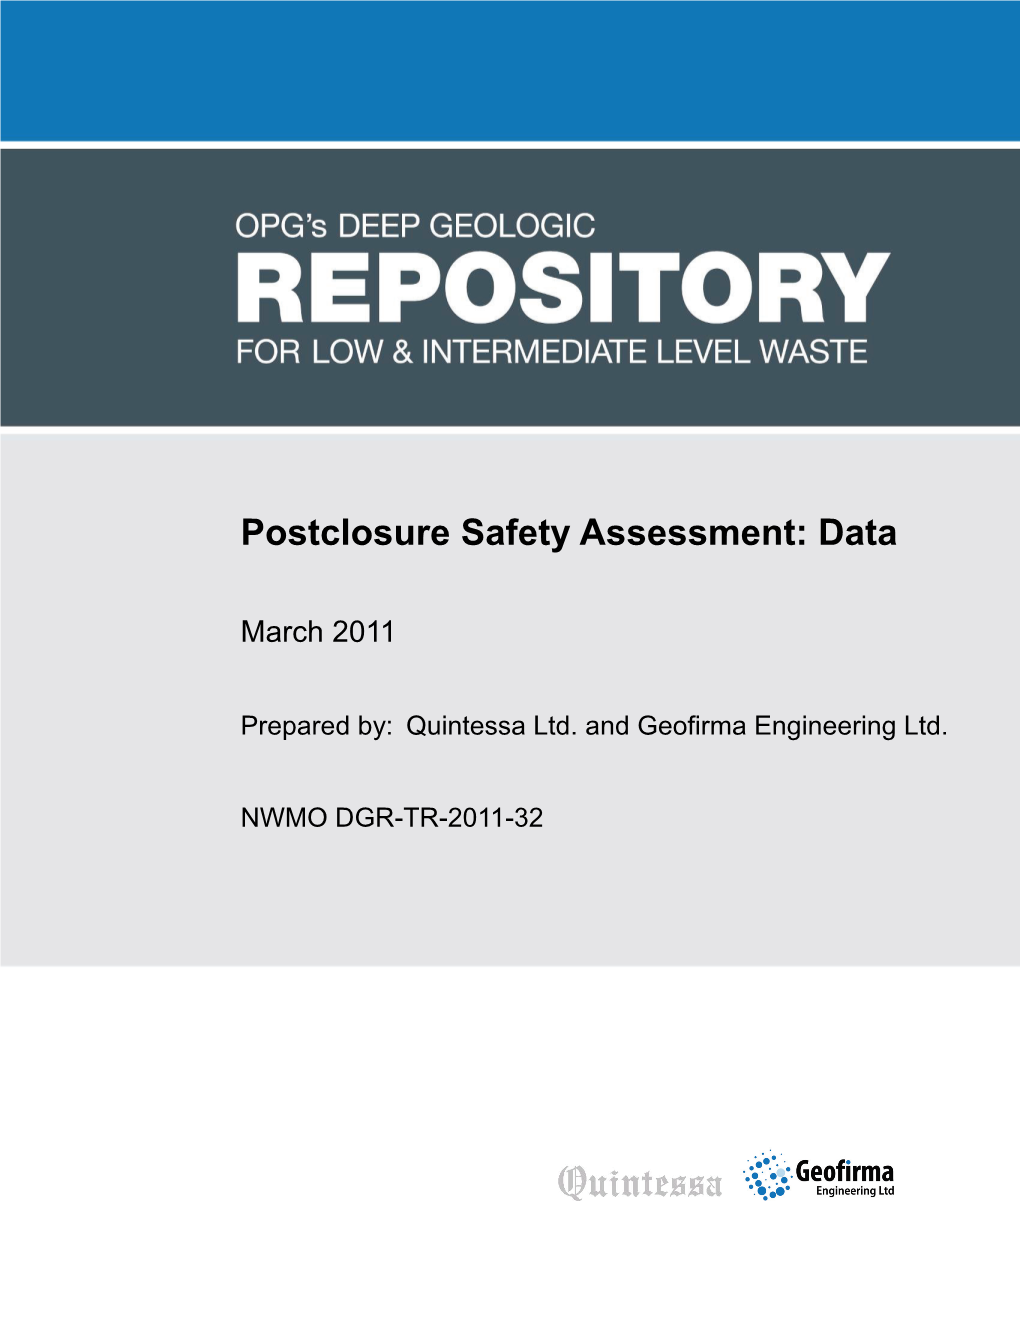 Postclosure Safety Assessment: Data